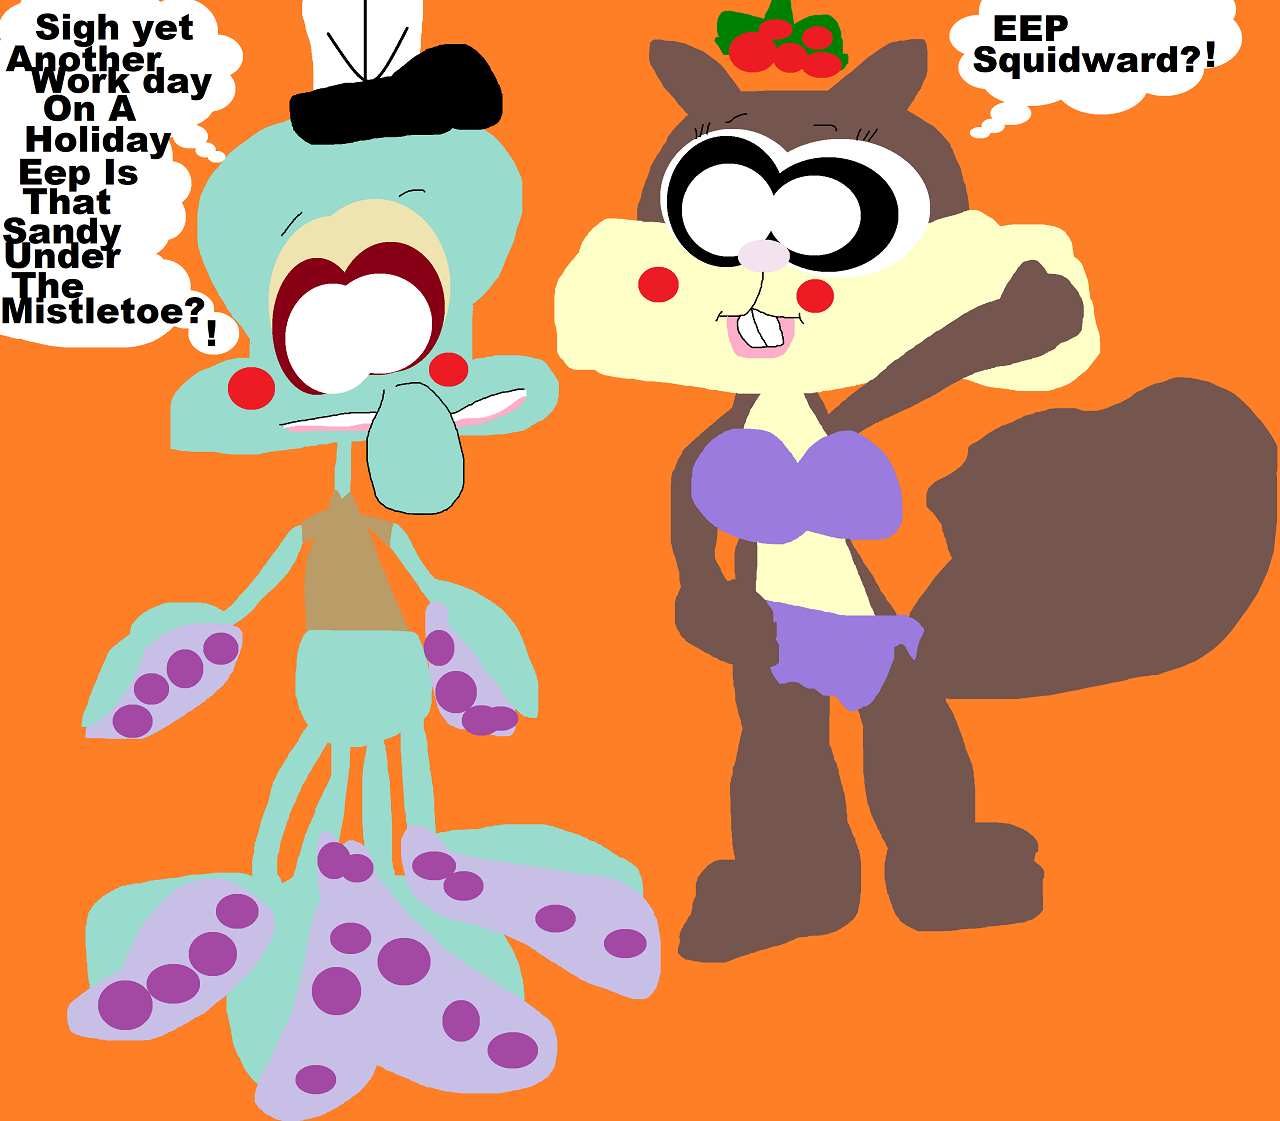 Awkward Squidward And Sandy Mistletoe Scene by Falconlobo